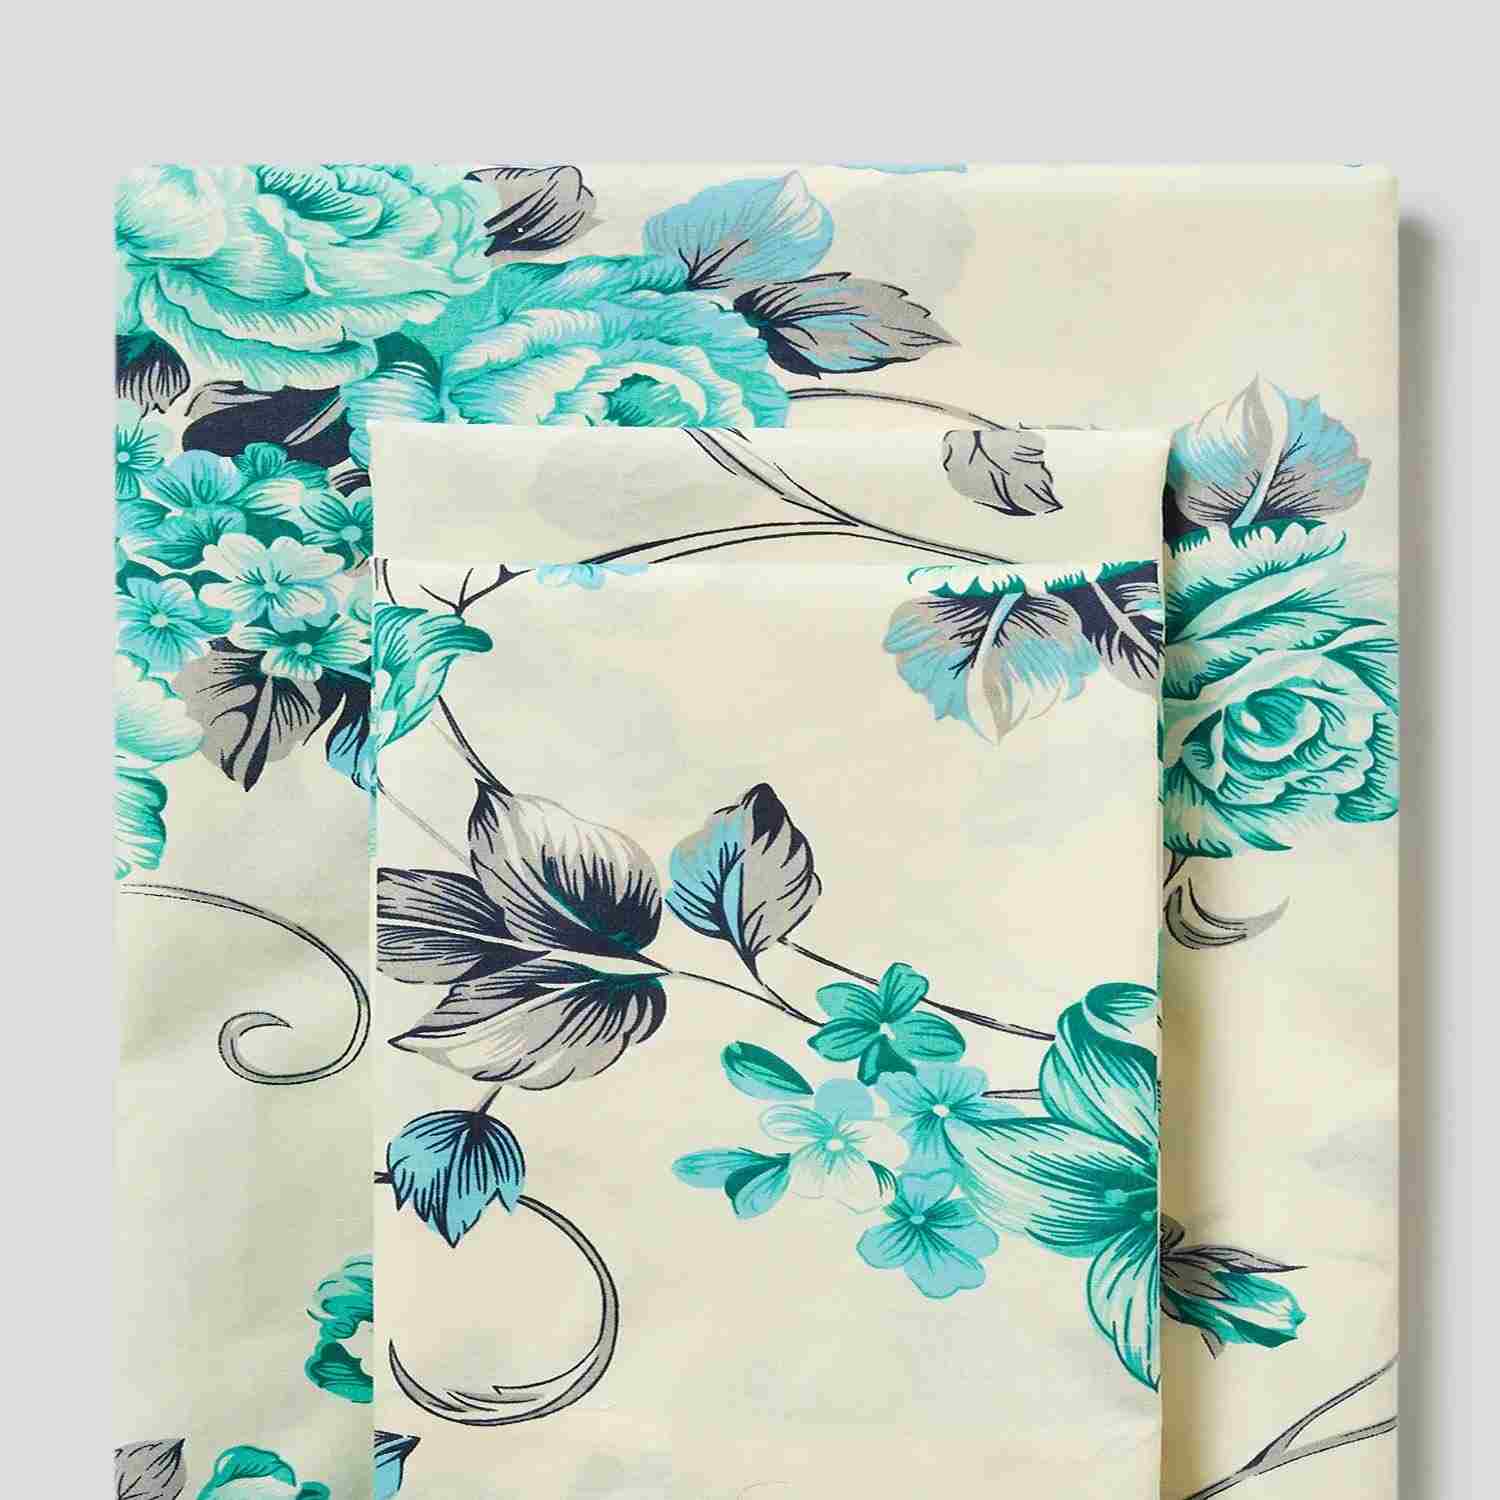 Rishahome 3-Piece Printed 180 Tc Cotton Bedsheet Set Queen Size, Premium Collection (1 Bedsheet + 2 Pillow Cases) Polo Blue